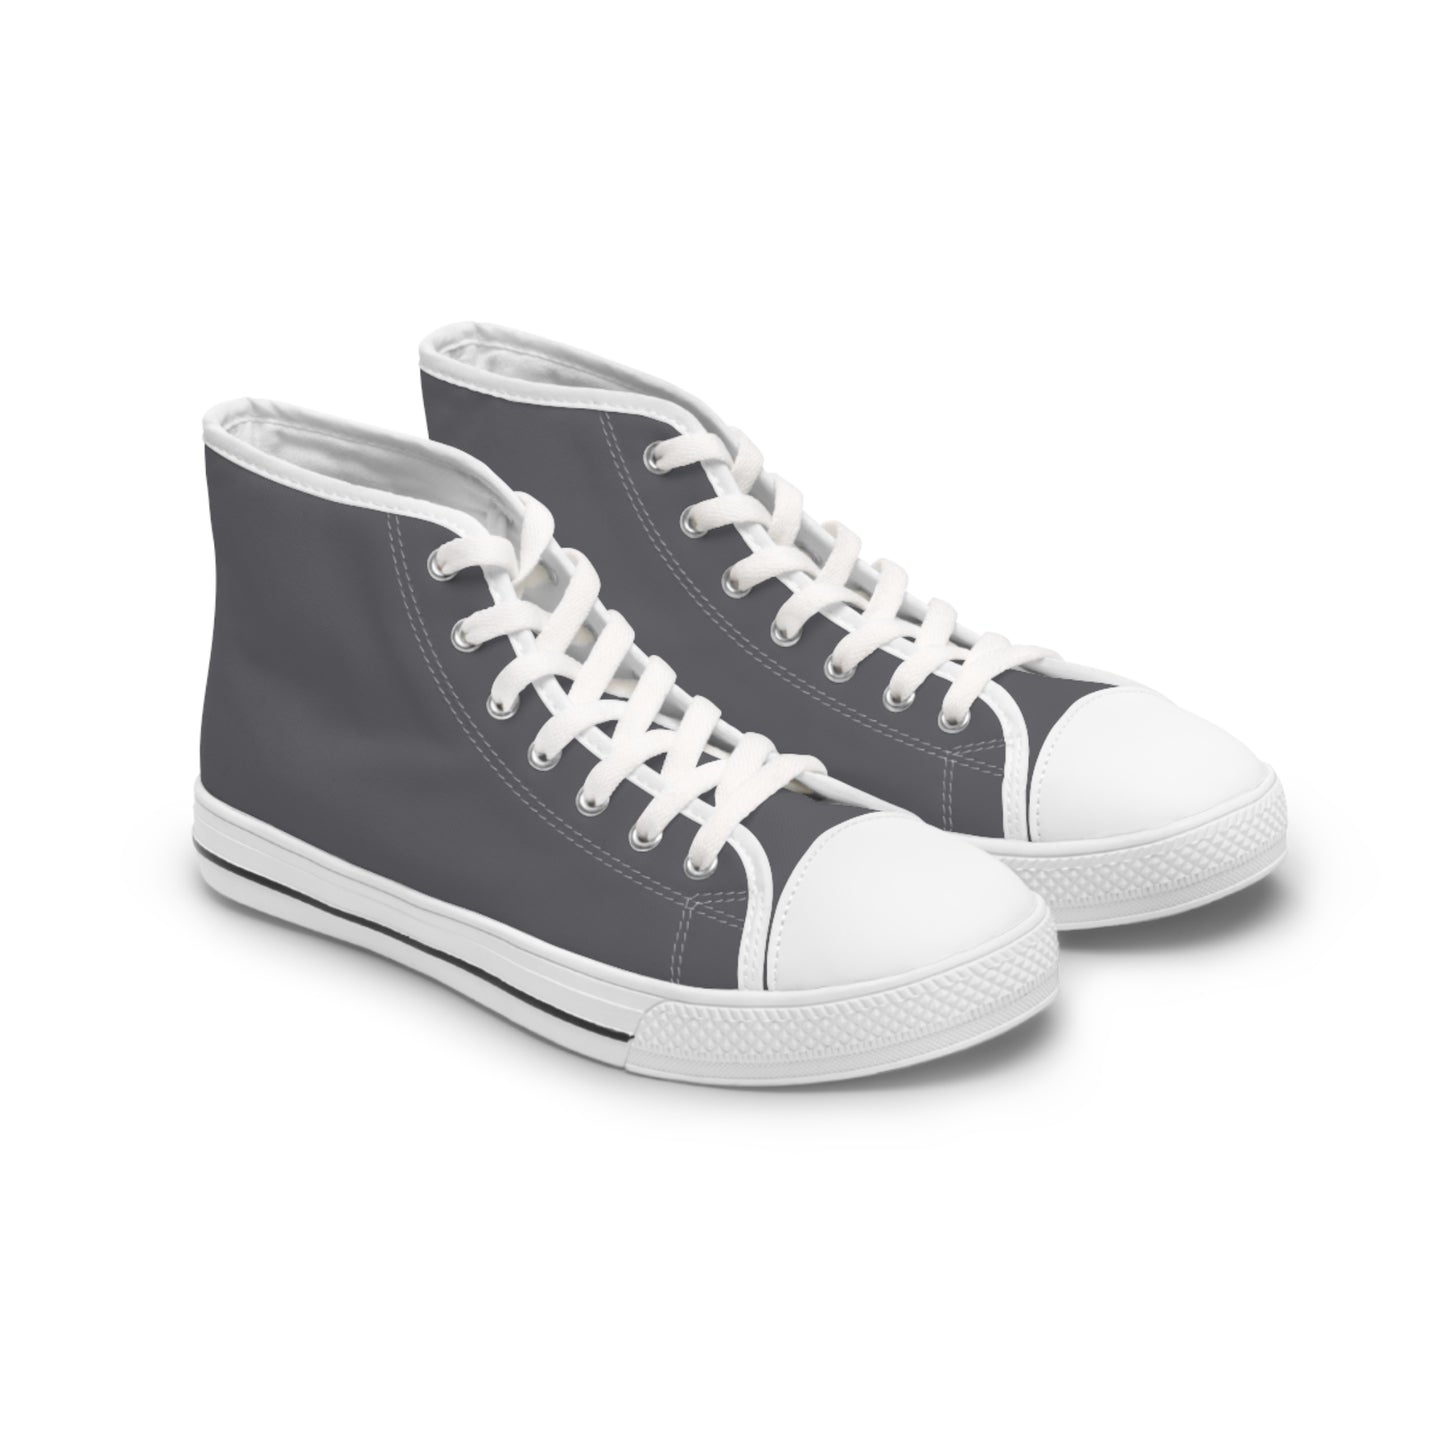 Women's Canvas High Top Solid Color Sneakers - Concrete Blue US 12 White sole